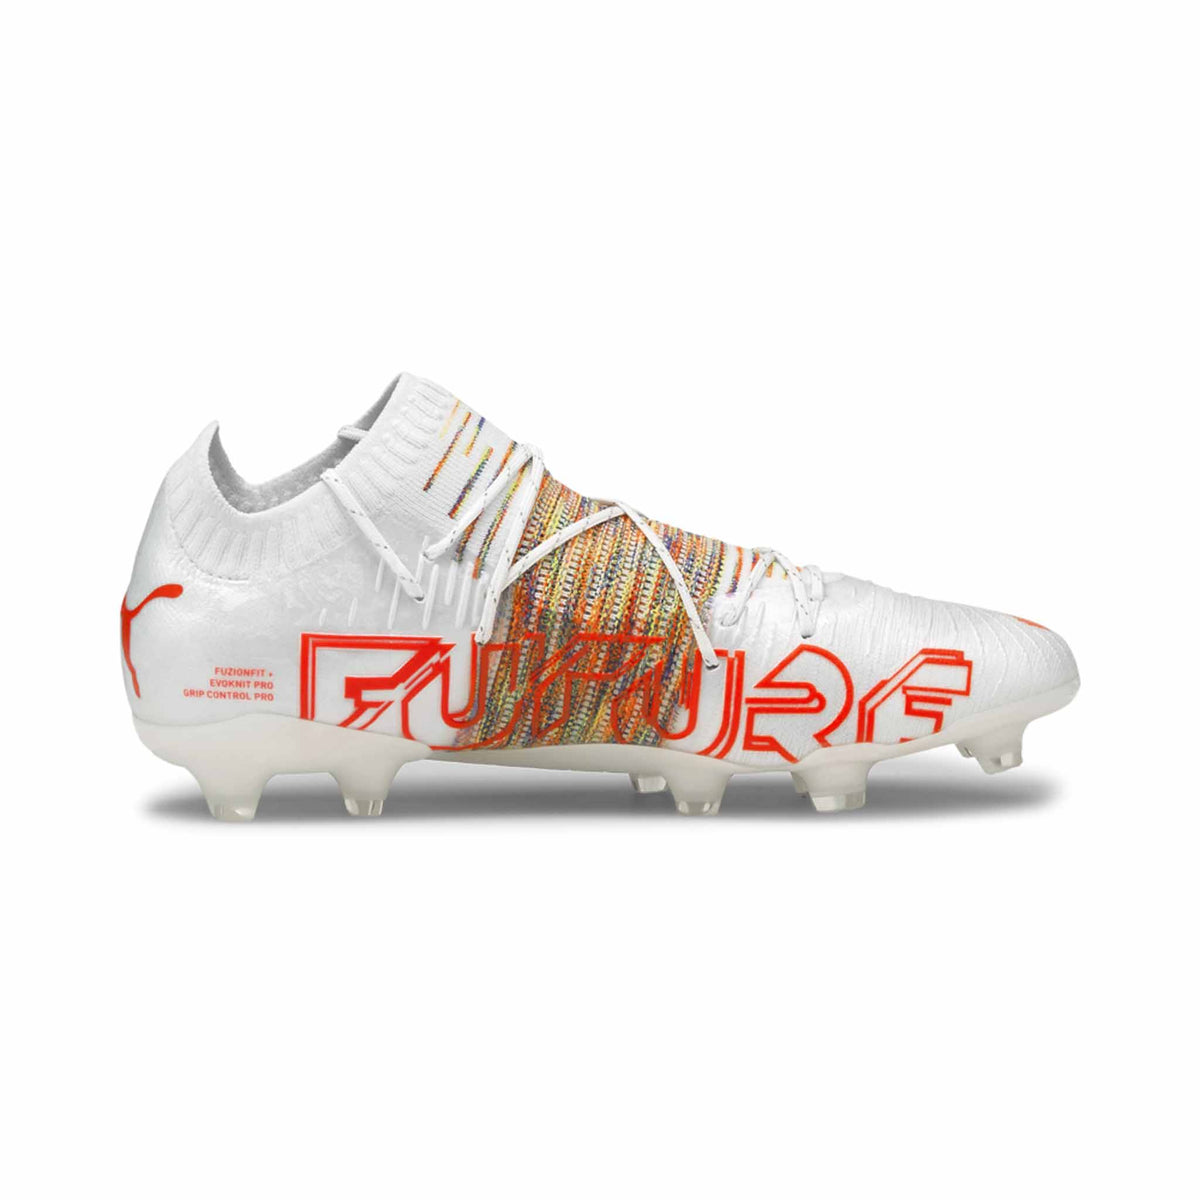 Puma Future Z 1.1 FG chaussures de soccer à crampons Puma White/Red Blast vue de côté